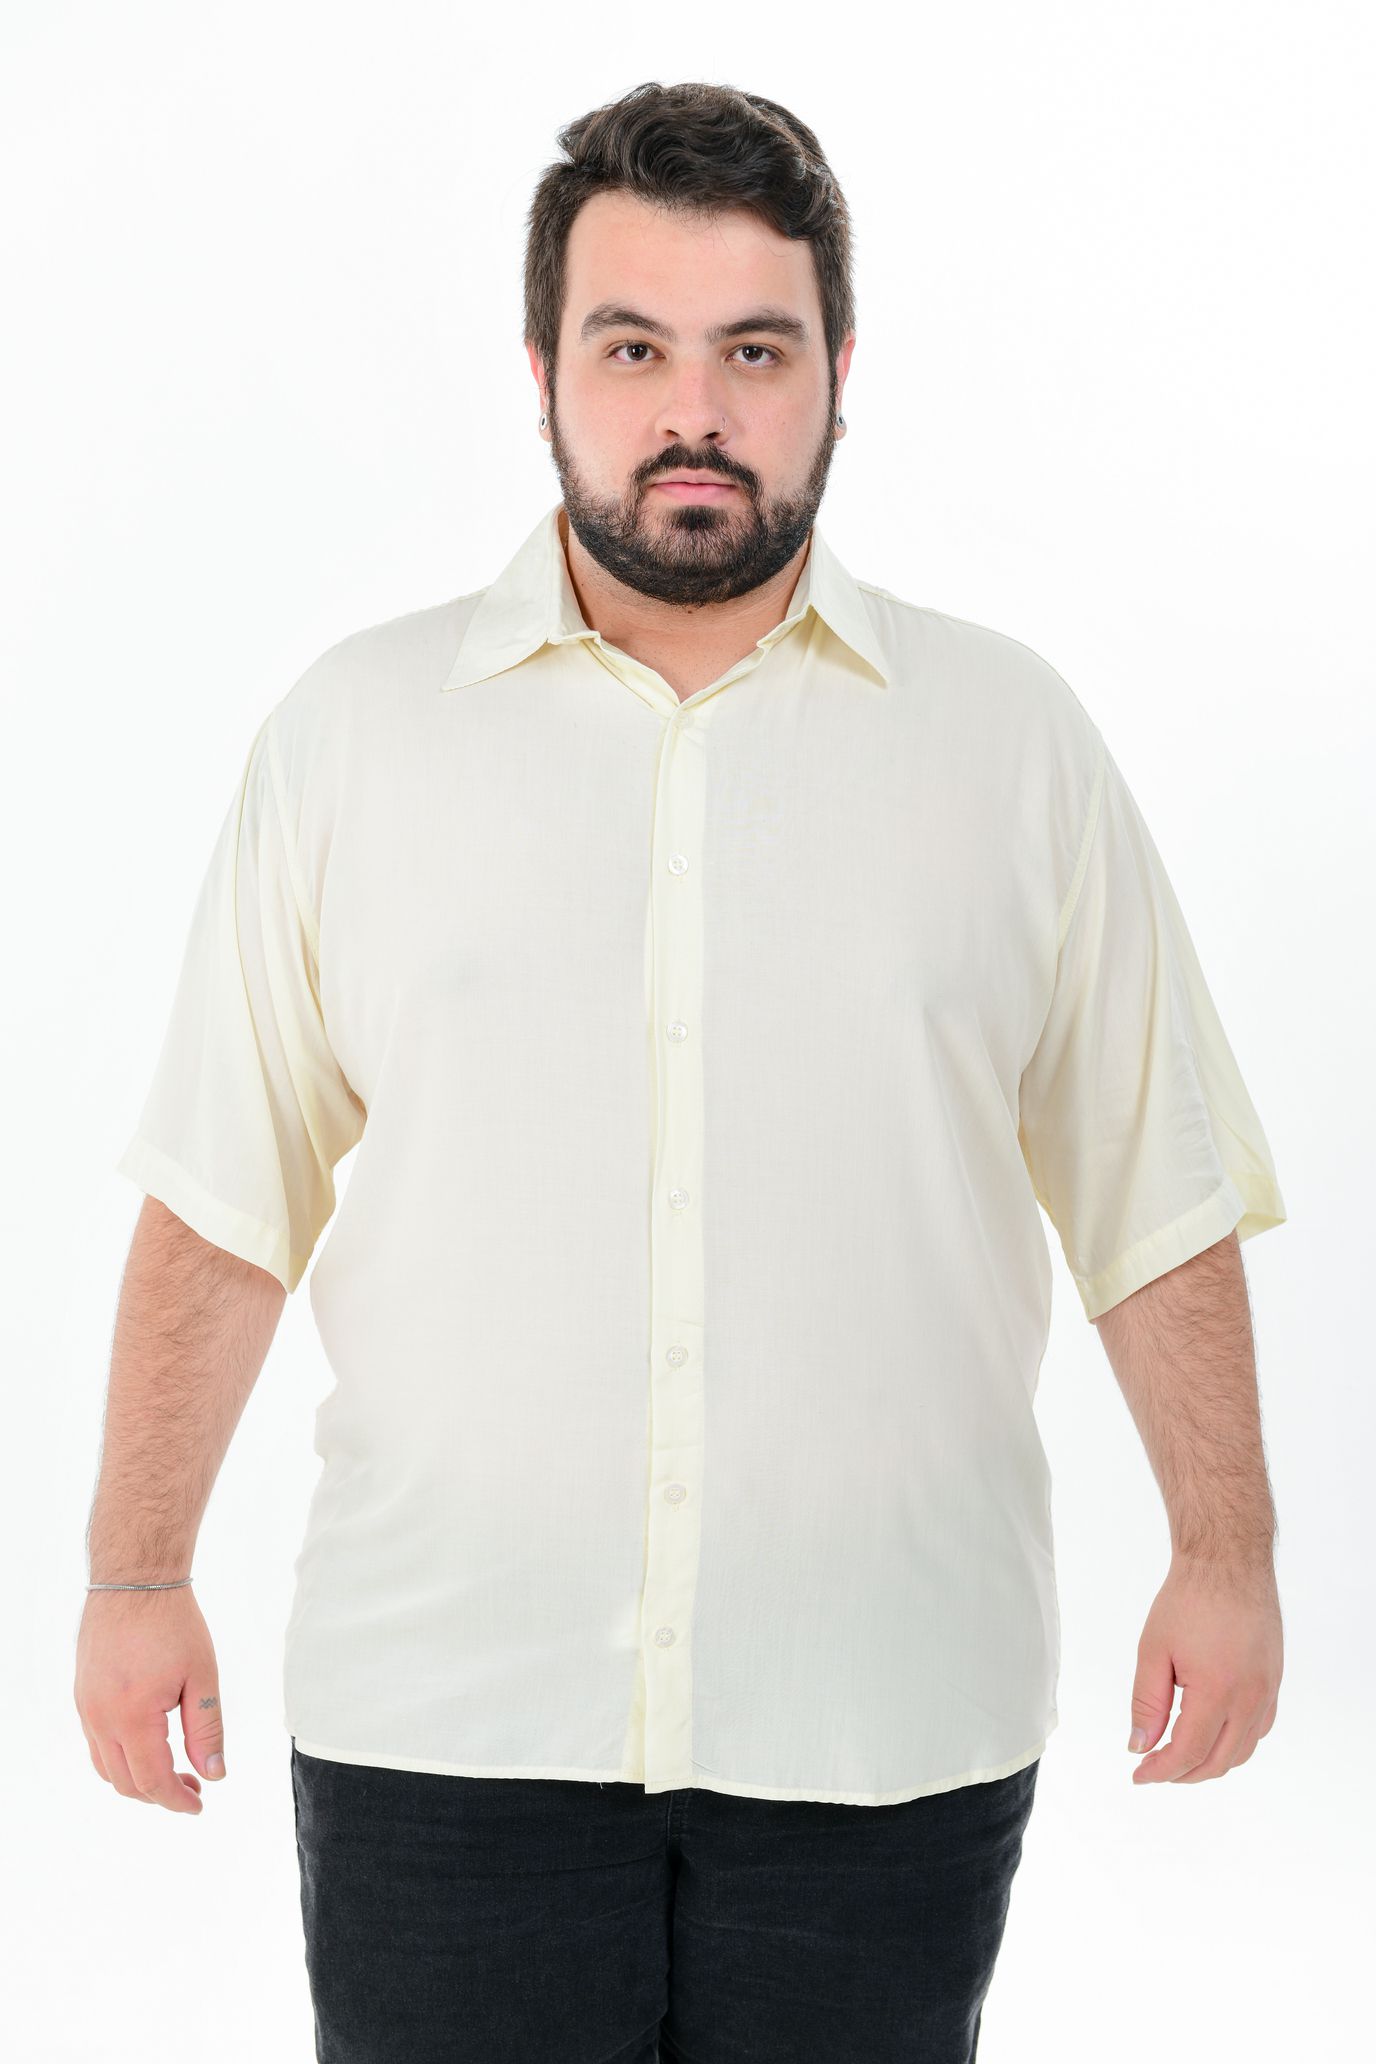 Camisa Básica Masculina Viscose Plus Size - Amarela Clara - DAZE MODAS